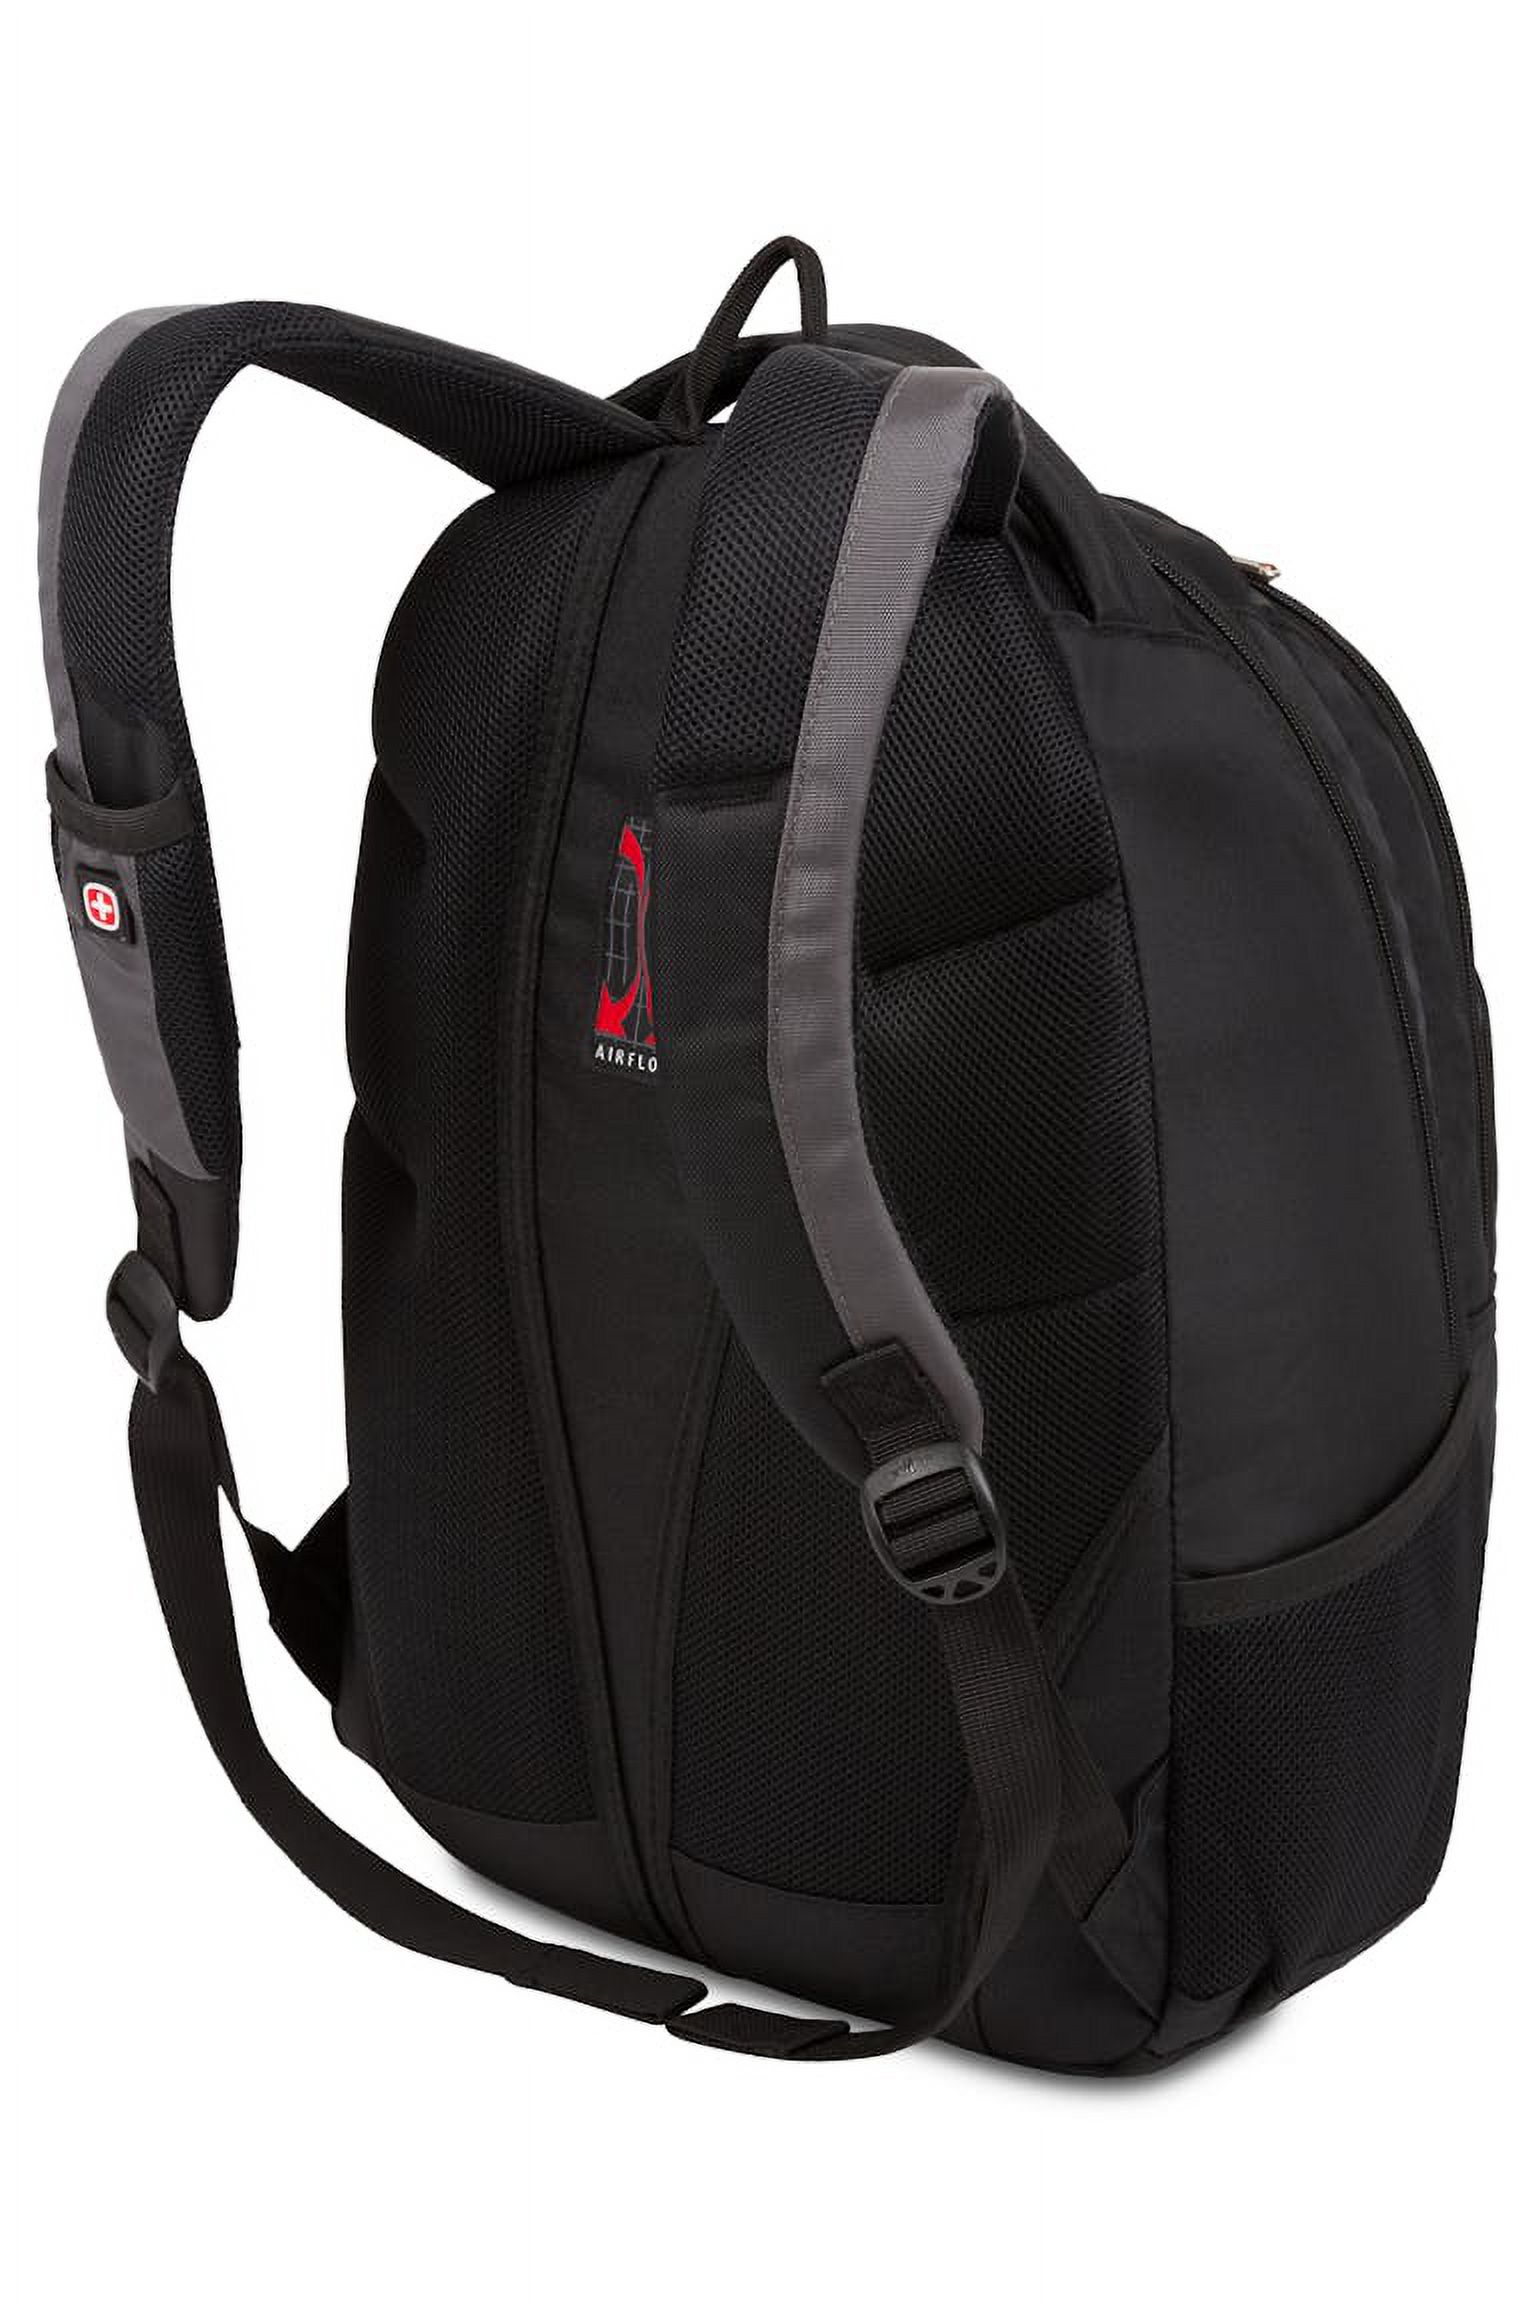 Swissgear 1186 backpack - image 4 of 4